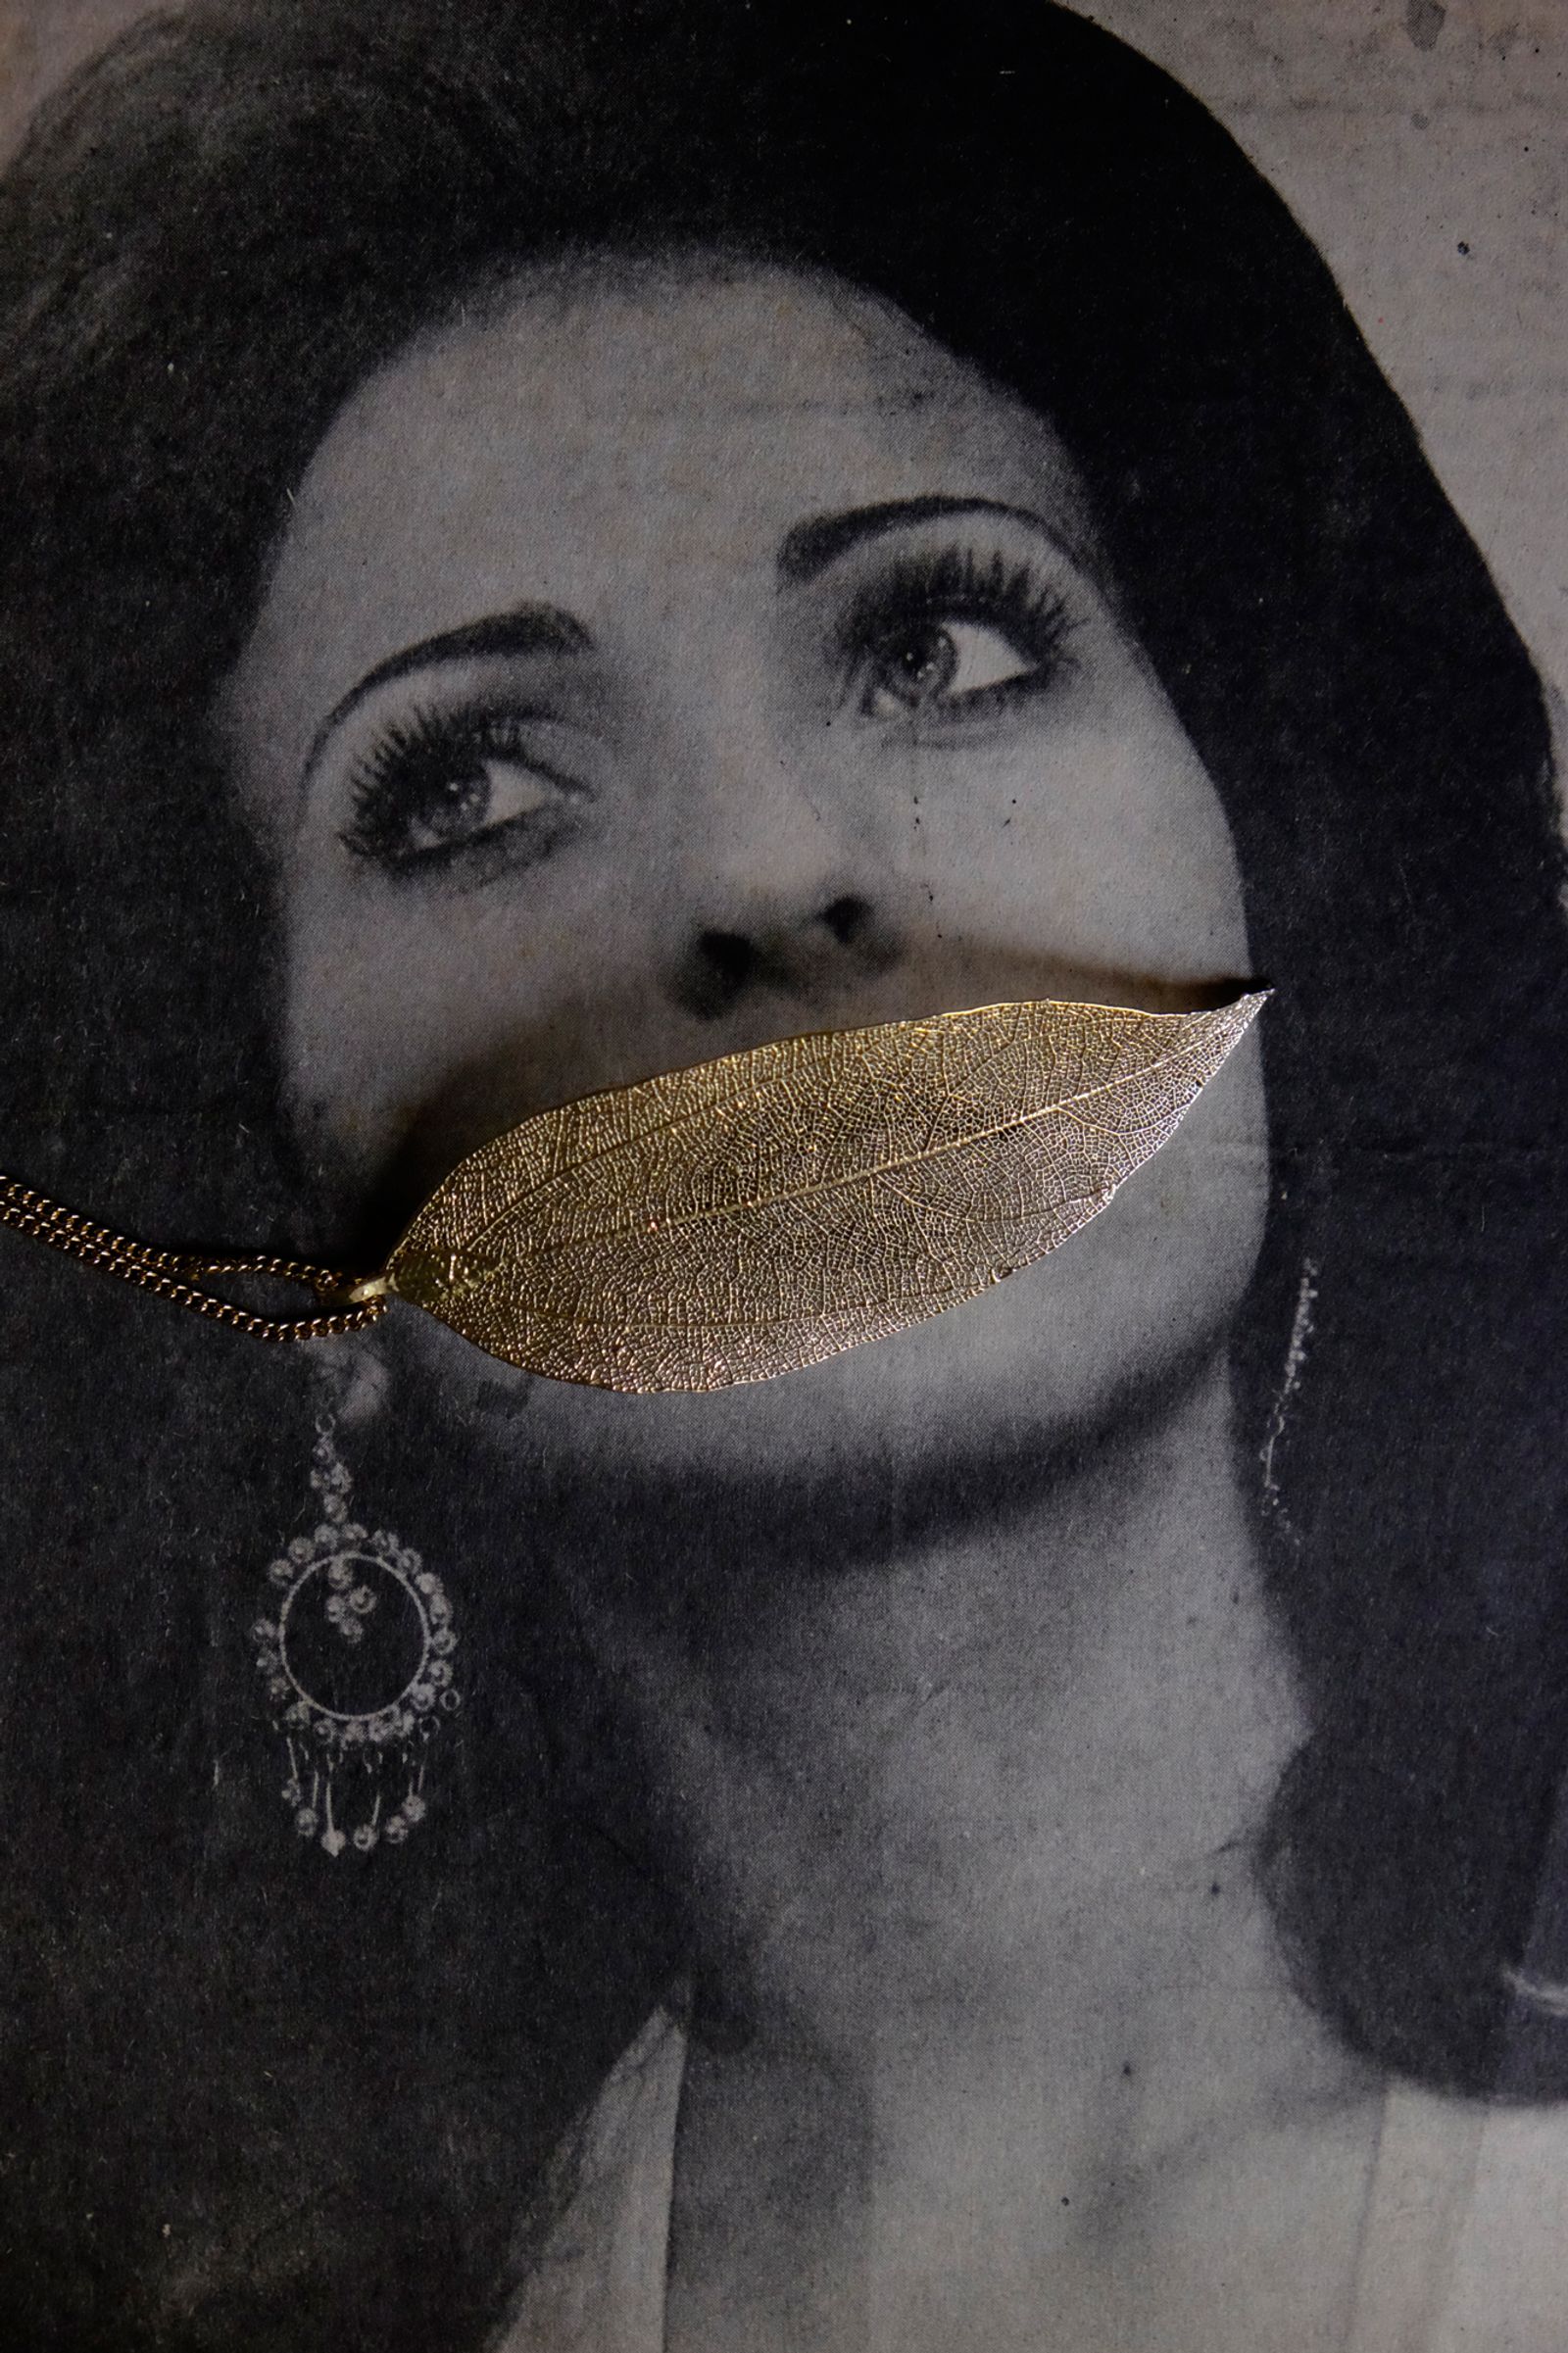 © Santiago Escobar-Jaramillo - Golden-leaf jewel covering an archive photo portrait. 2016.